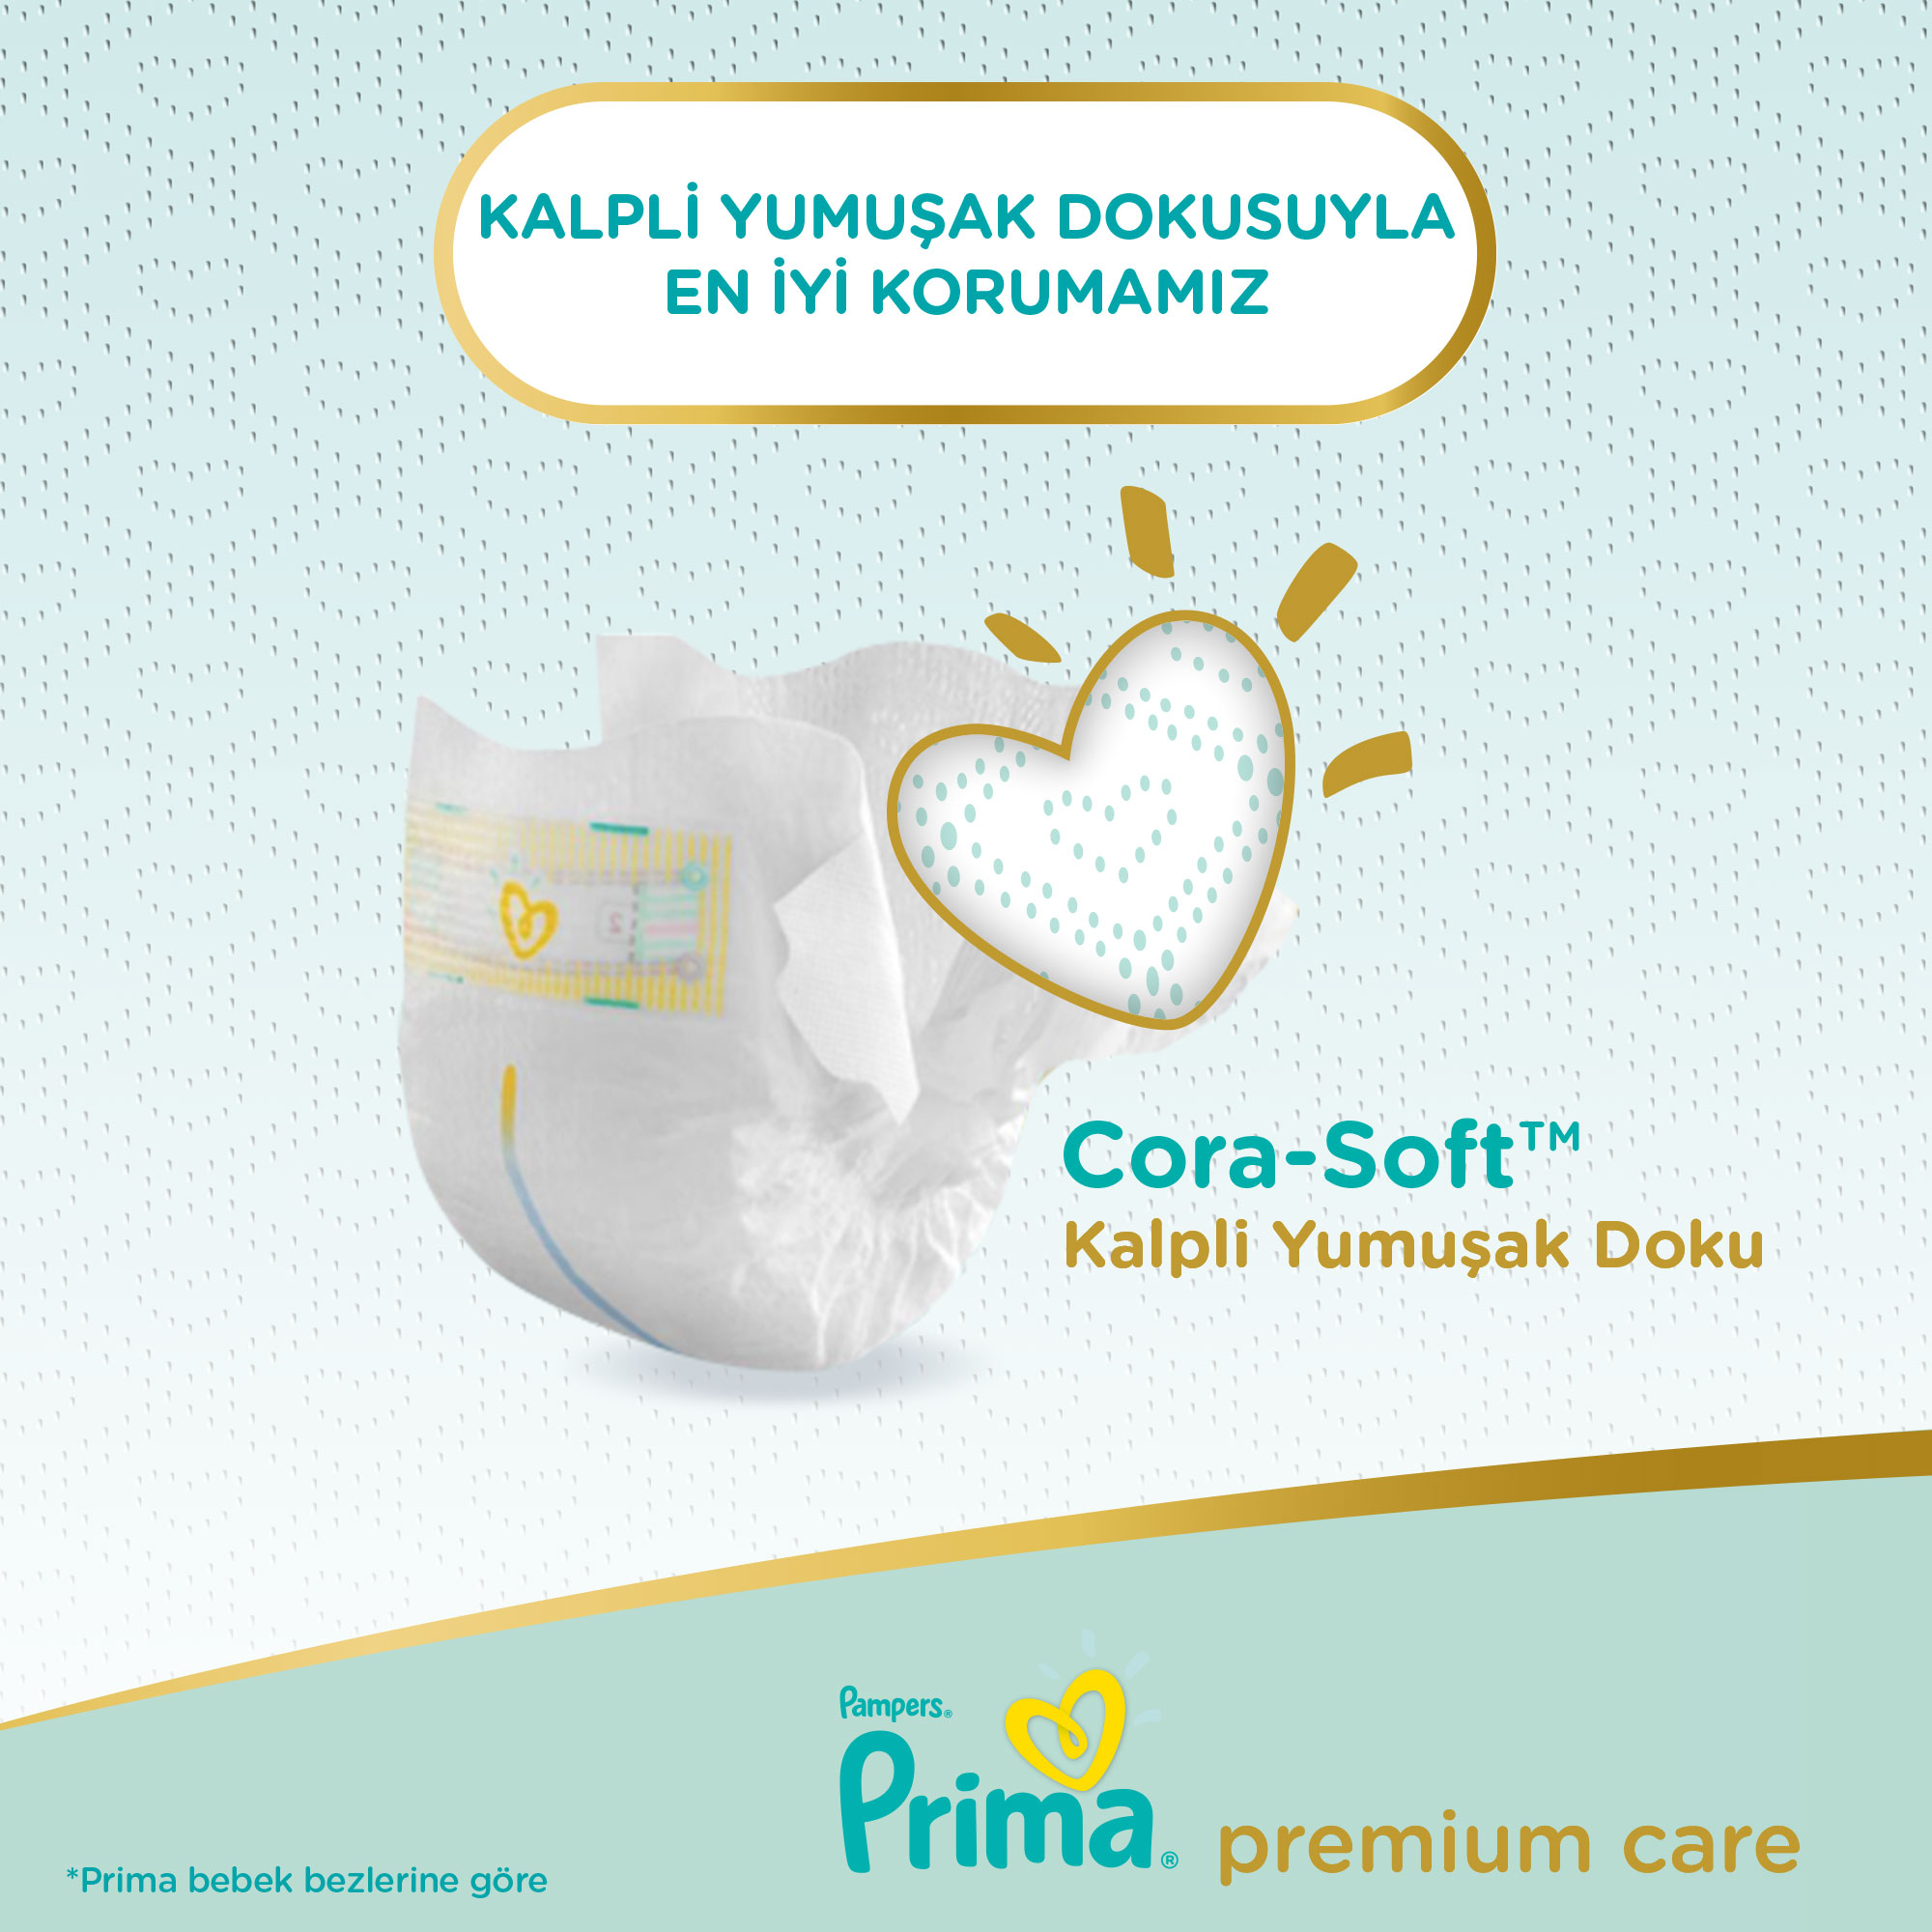 Prima Bebek Bezi Premium Care 2 Beden 2 x 60 Jumbo Paket 120 Adet